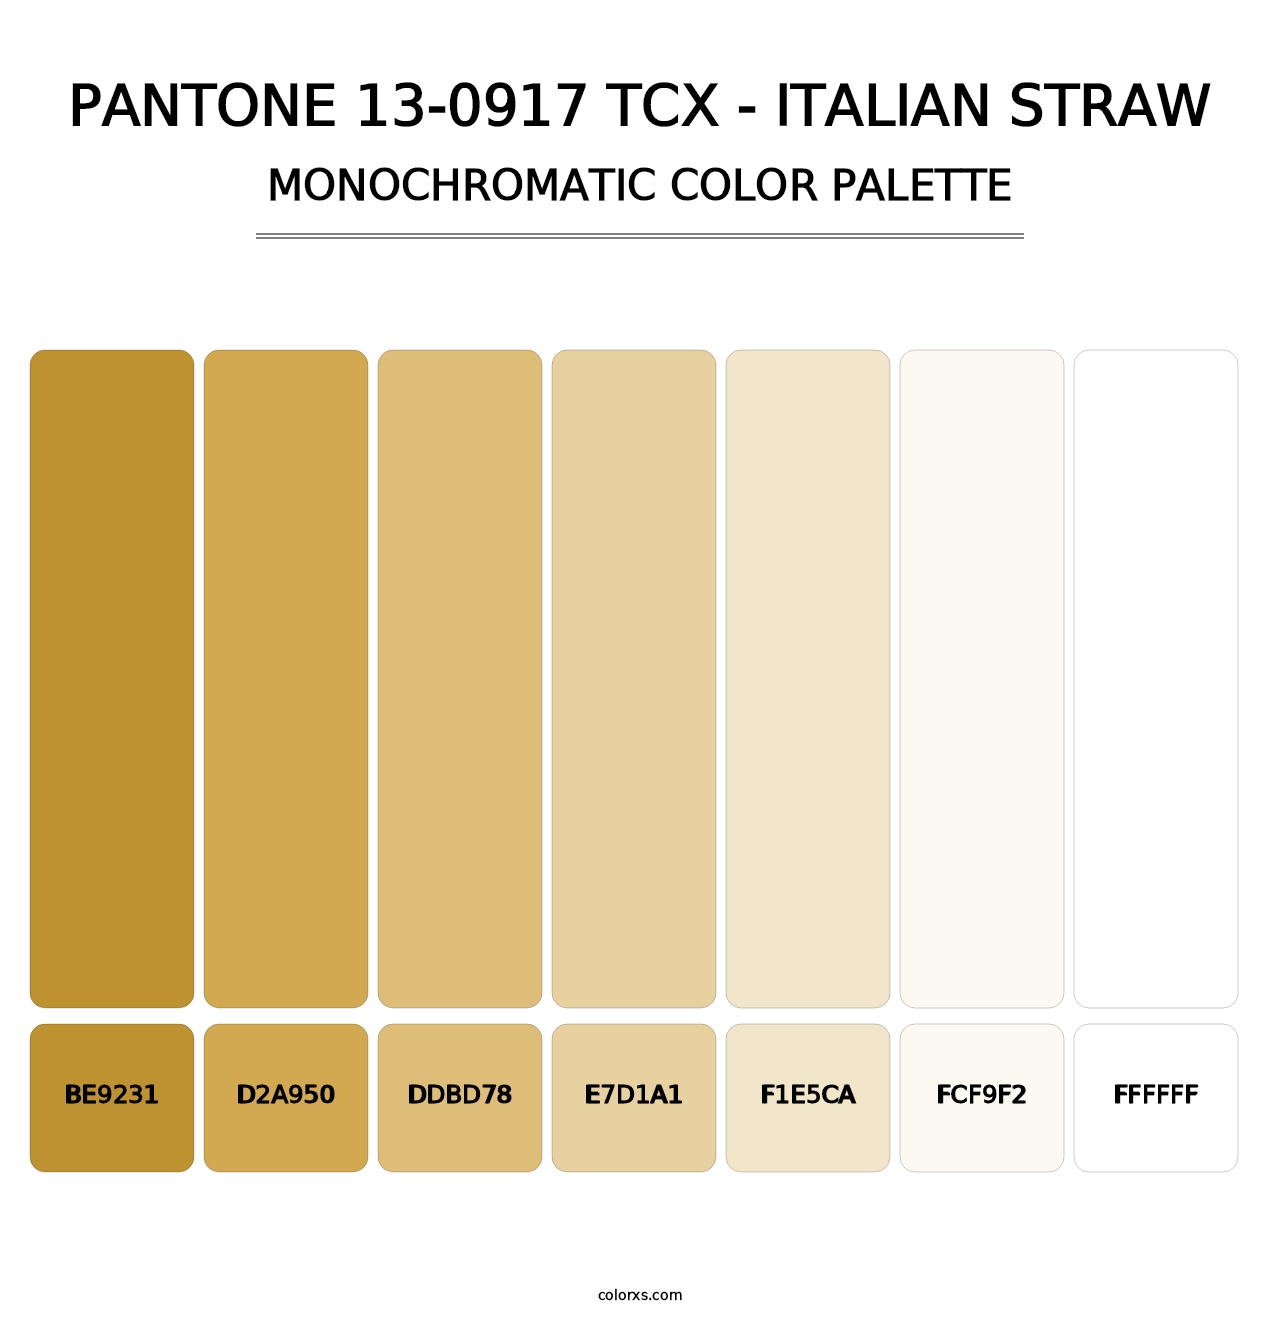 PANTONE 13-0917 TCX - Italian Straw - Monochromatic Color Palette